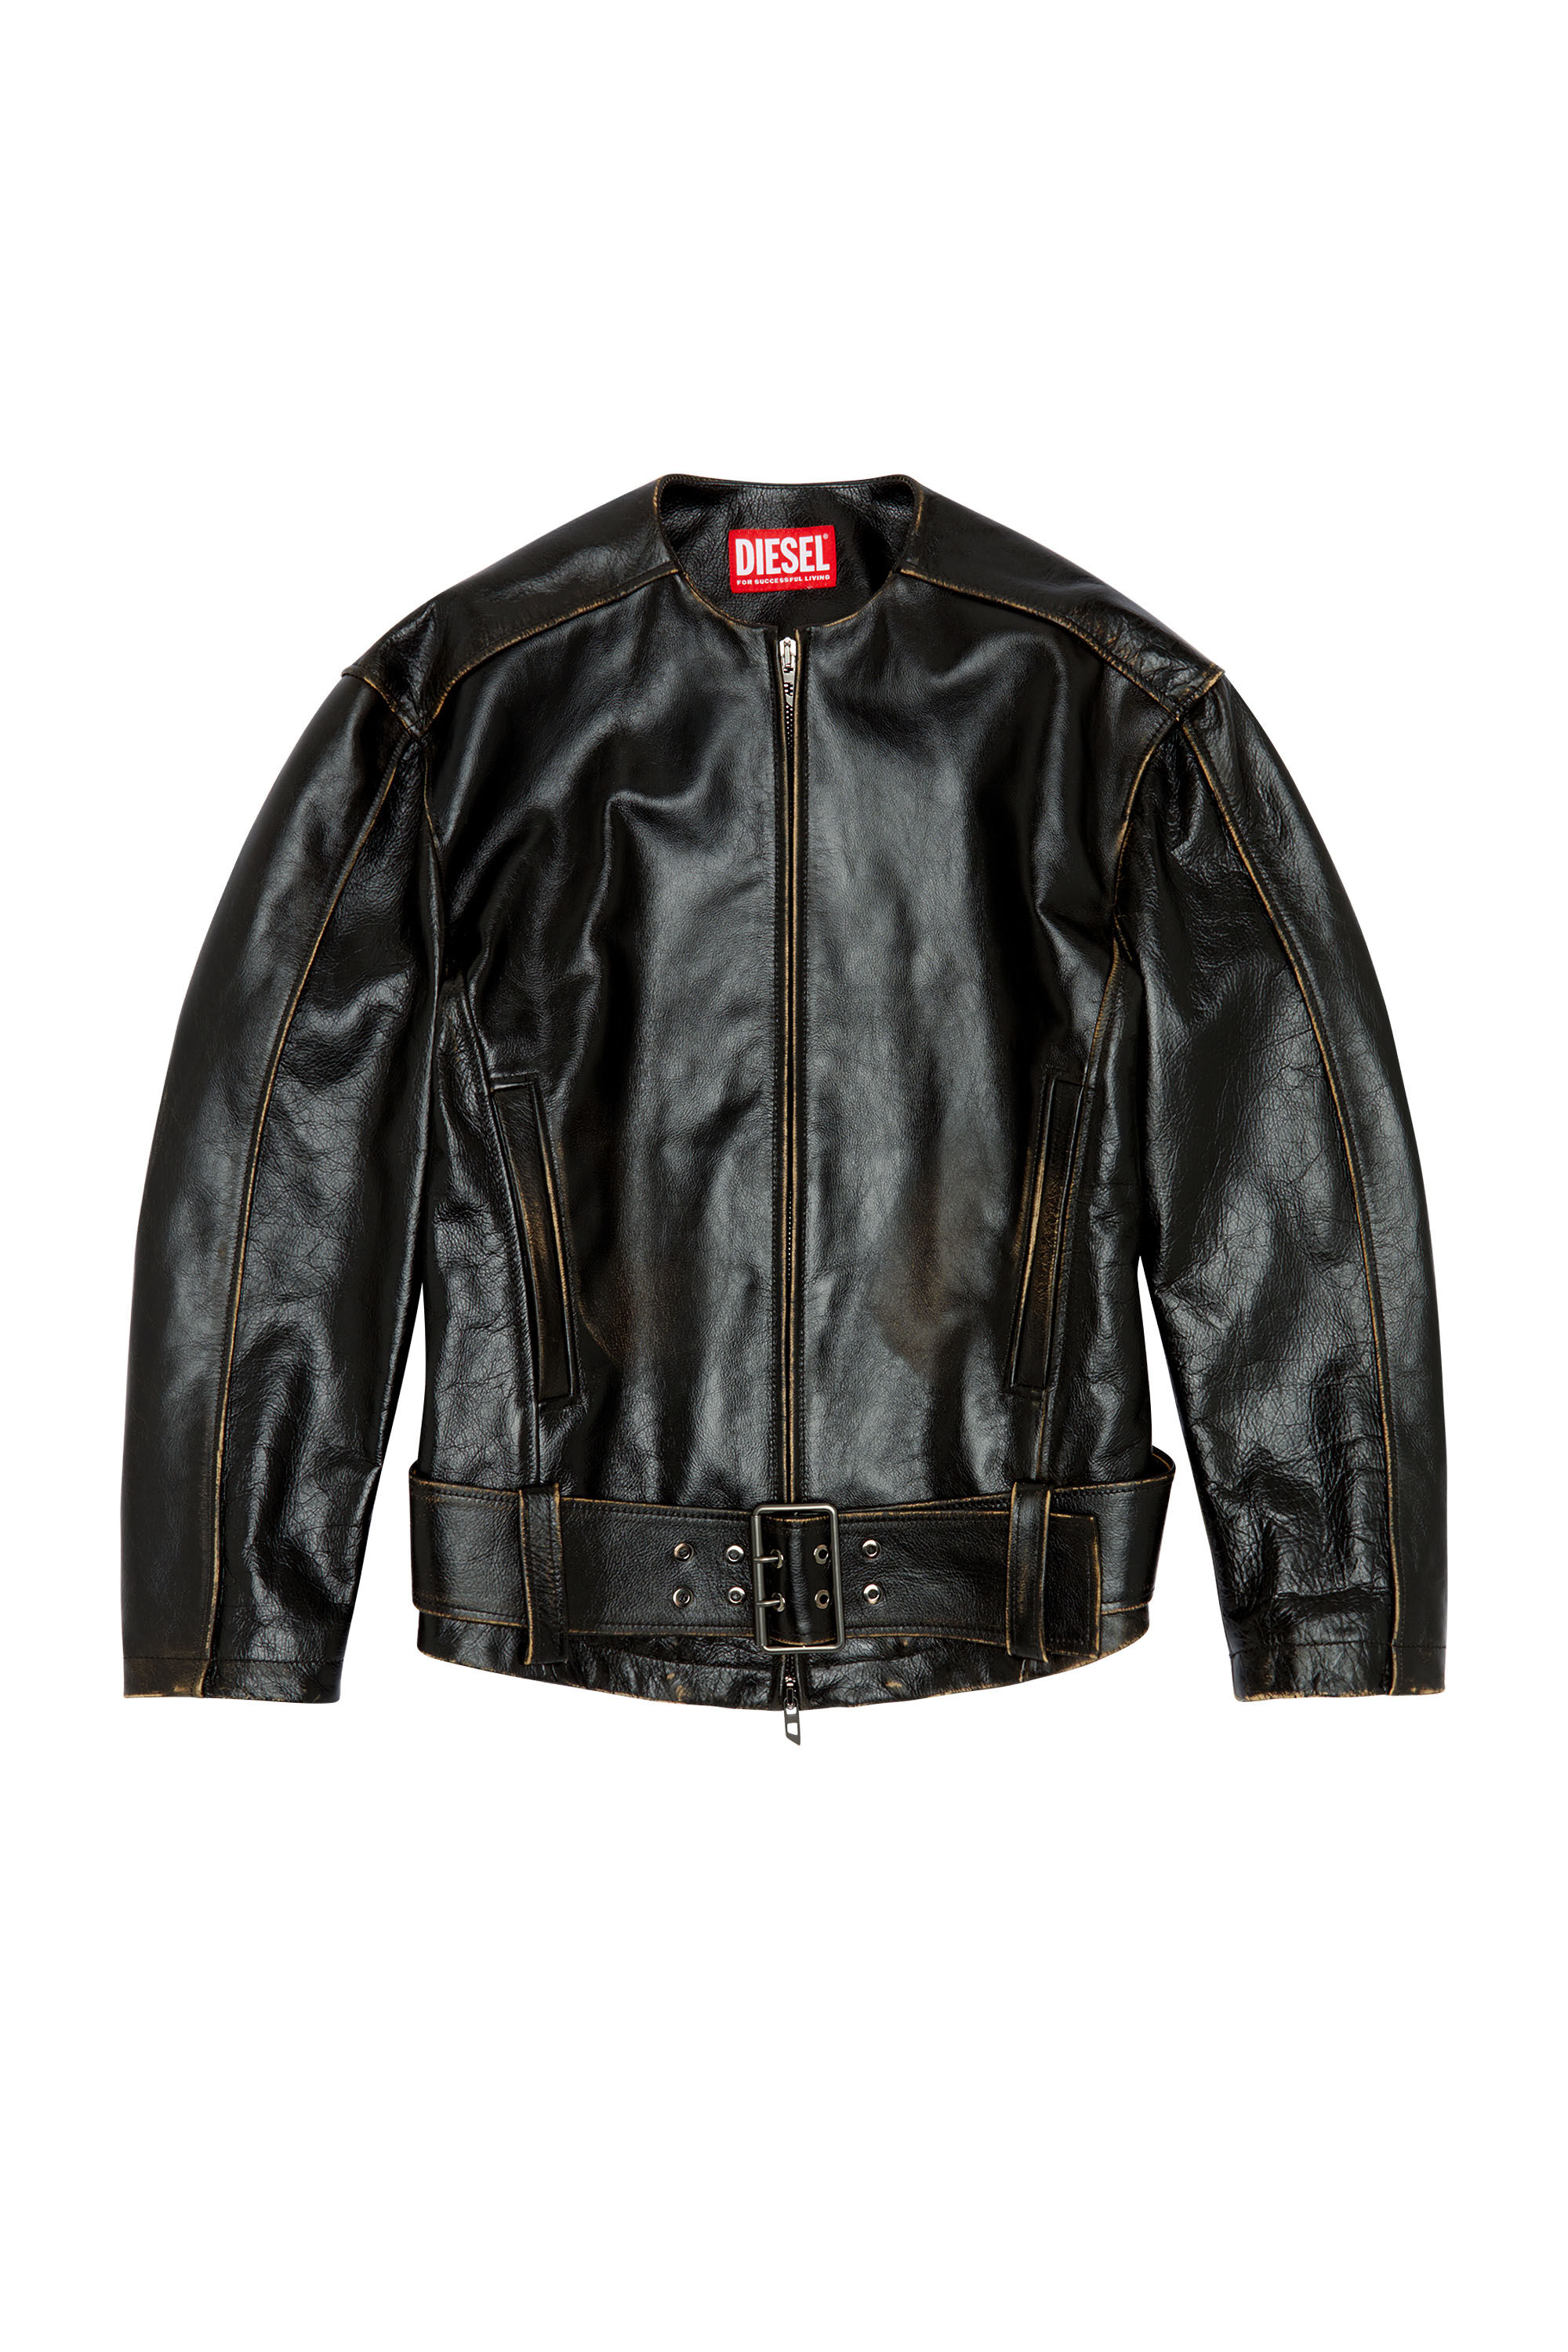 Diesel - L-MARGY, Female Oversized biker jacket in brushed leather in ブラック - Image 2